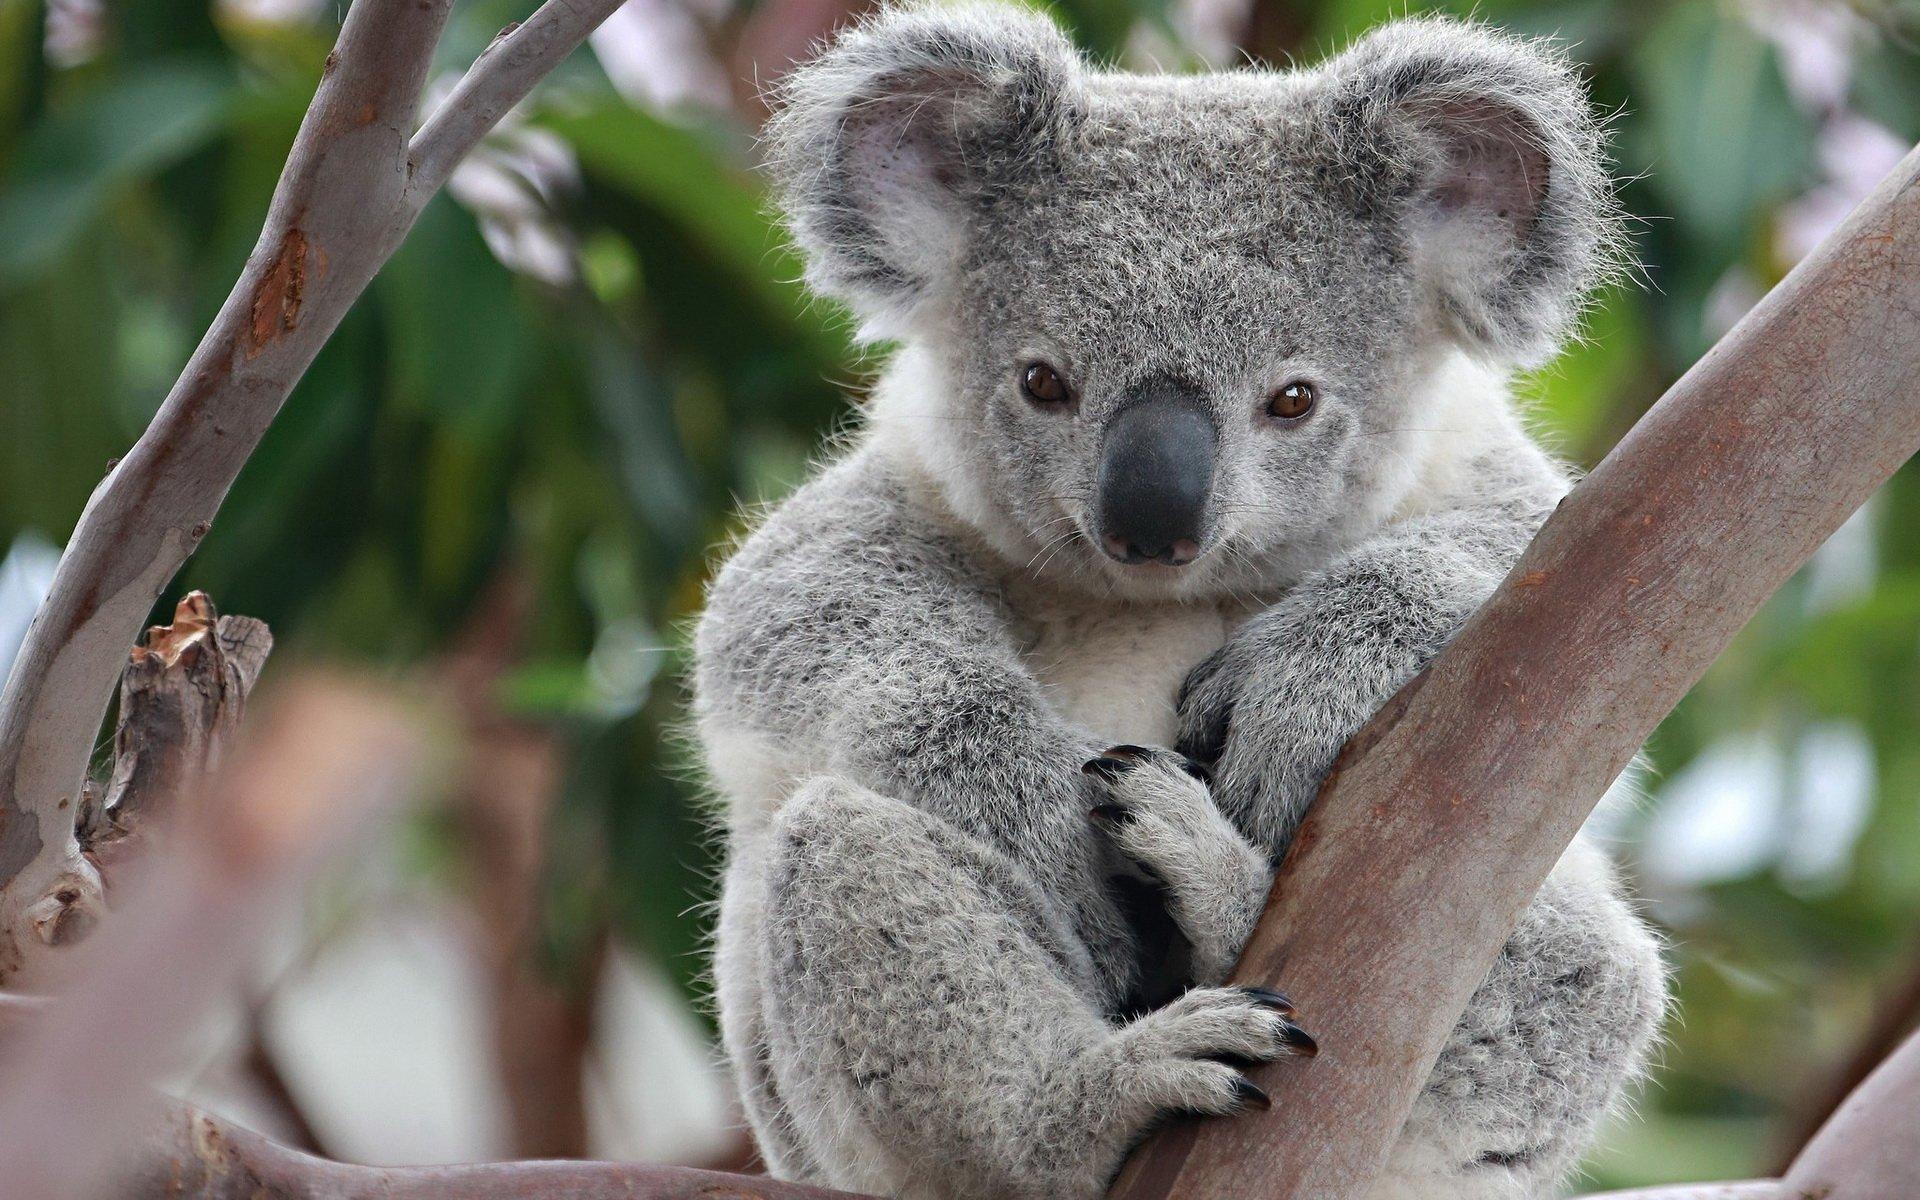 Koala Desktop Wallpaper 1080p Background, Wallpaperhive, Free Hd Wallpapers,  Pastel Art Of An Adorable Kawaii Baby Koala Background Image And Wallpaper  for Free Download